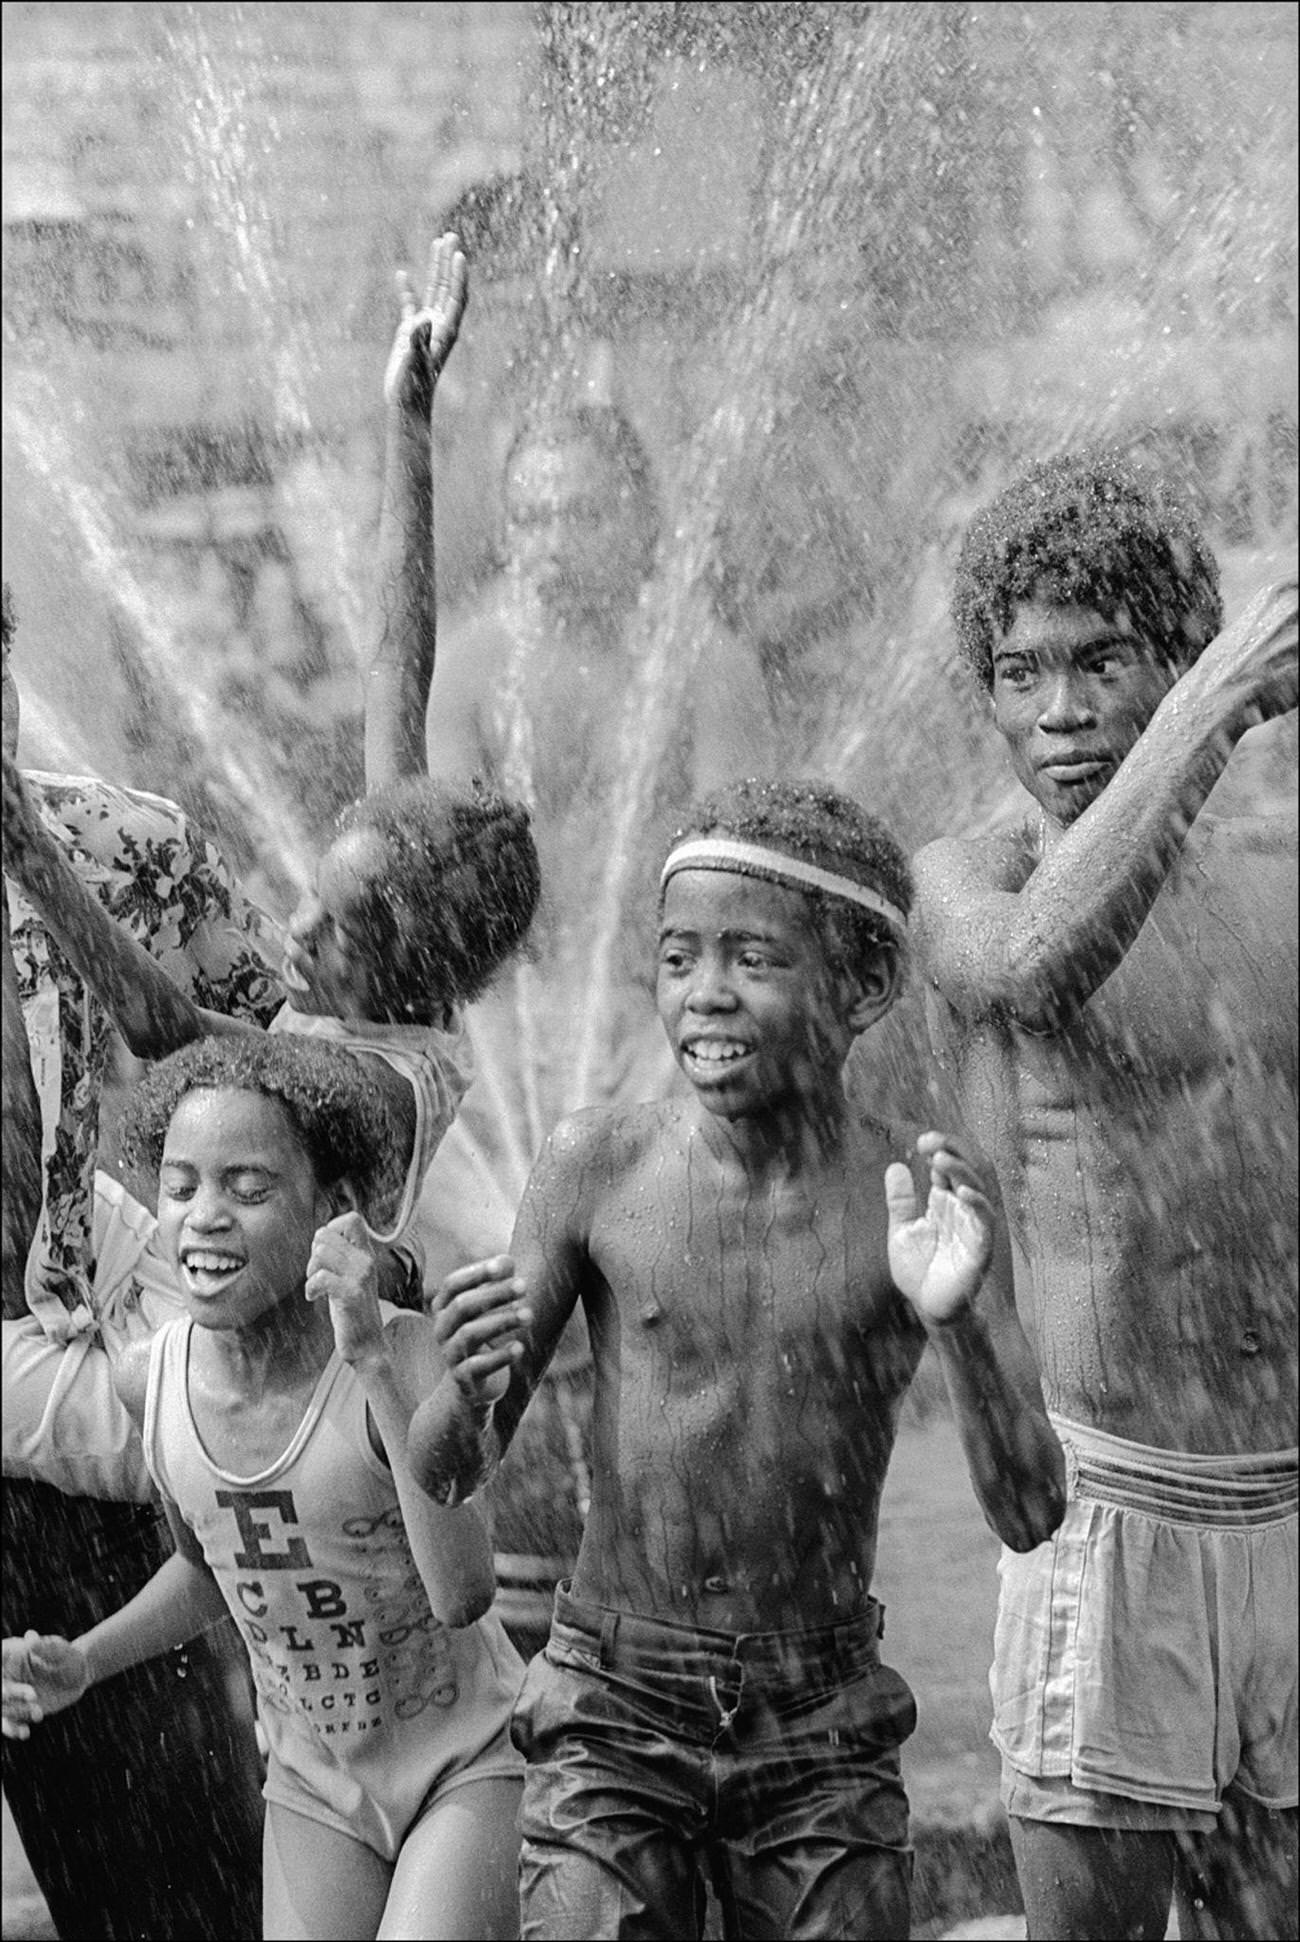 Children Cool Off Under The Spray From A Fire Hydrant Sprinkler In Brooklyn'S Bushwick Neighborhood, Brooklyn, 1977